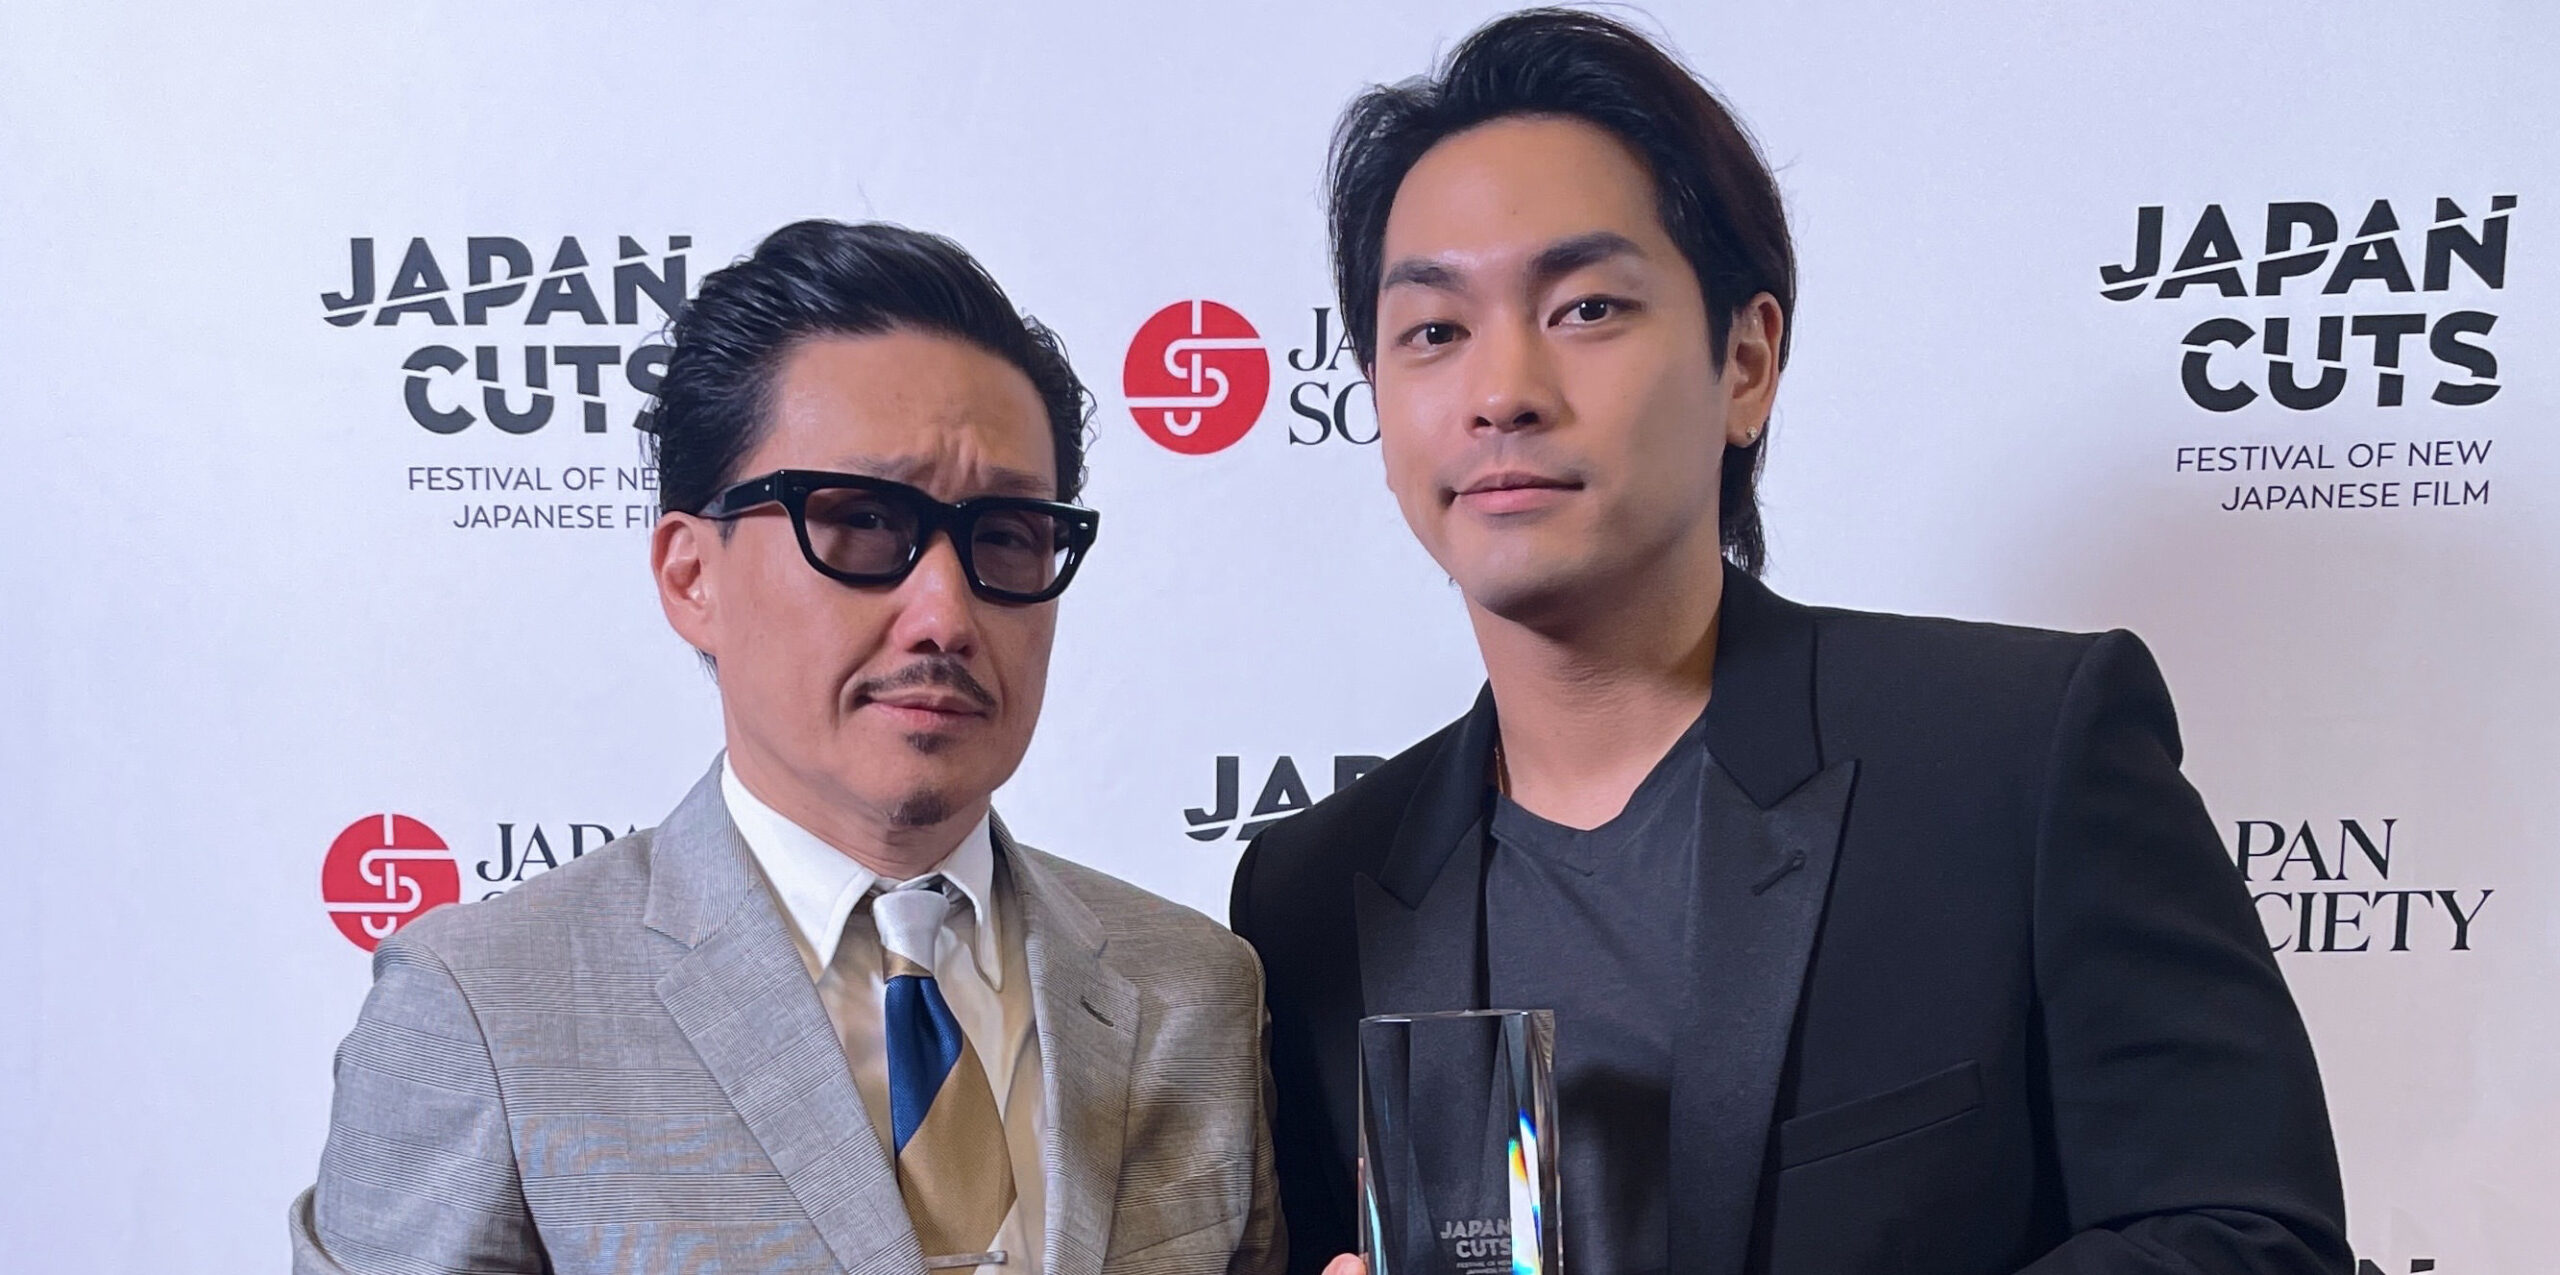 Director KENTARO and actor Yuya Yagira. Photo Credit: Japan Society